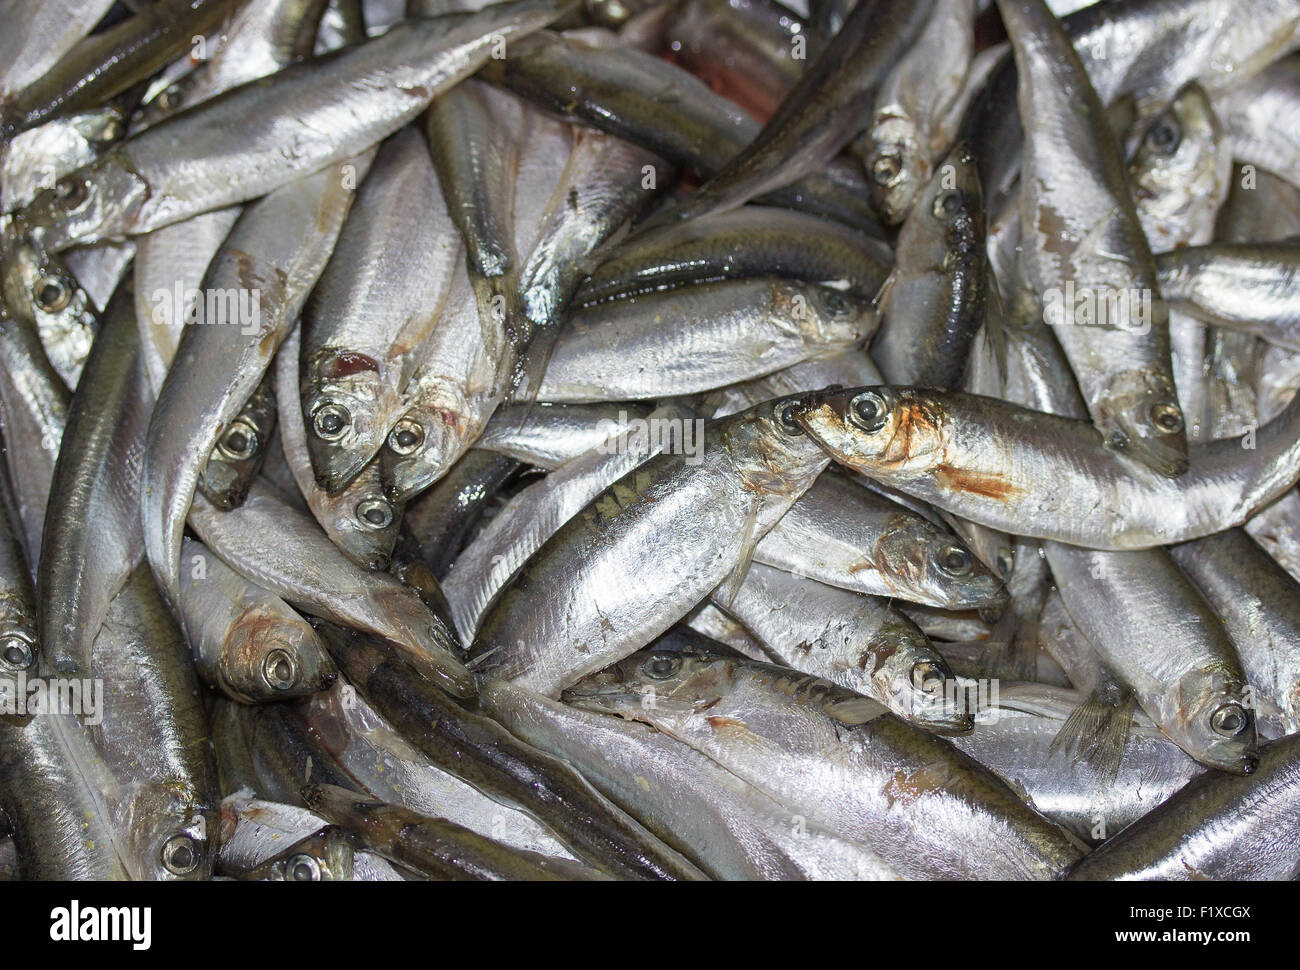 Fresh raw spot on fish market. Stock Photo